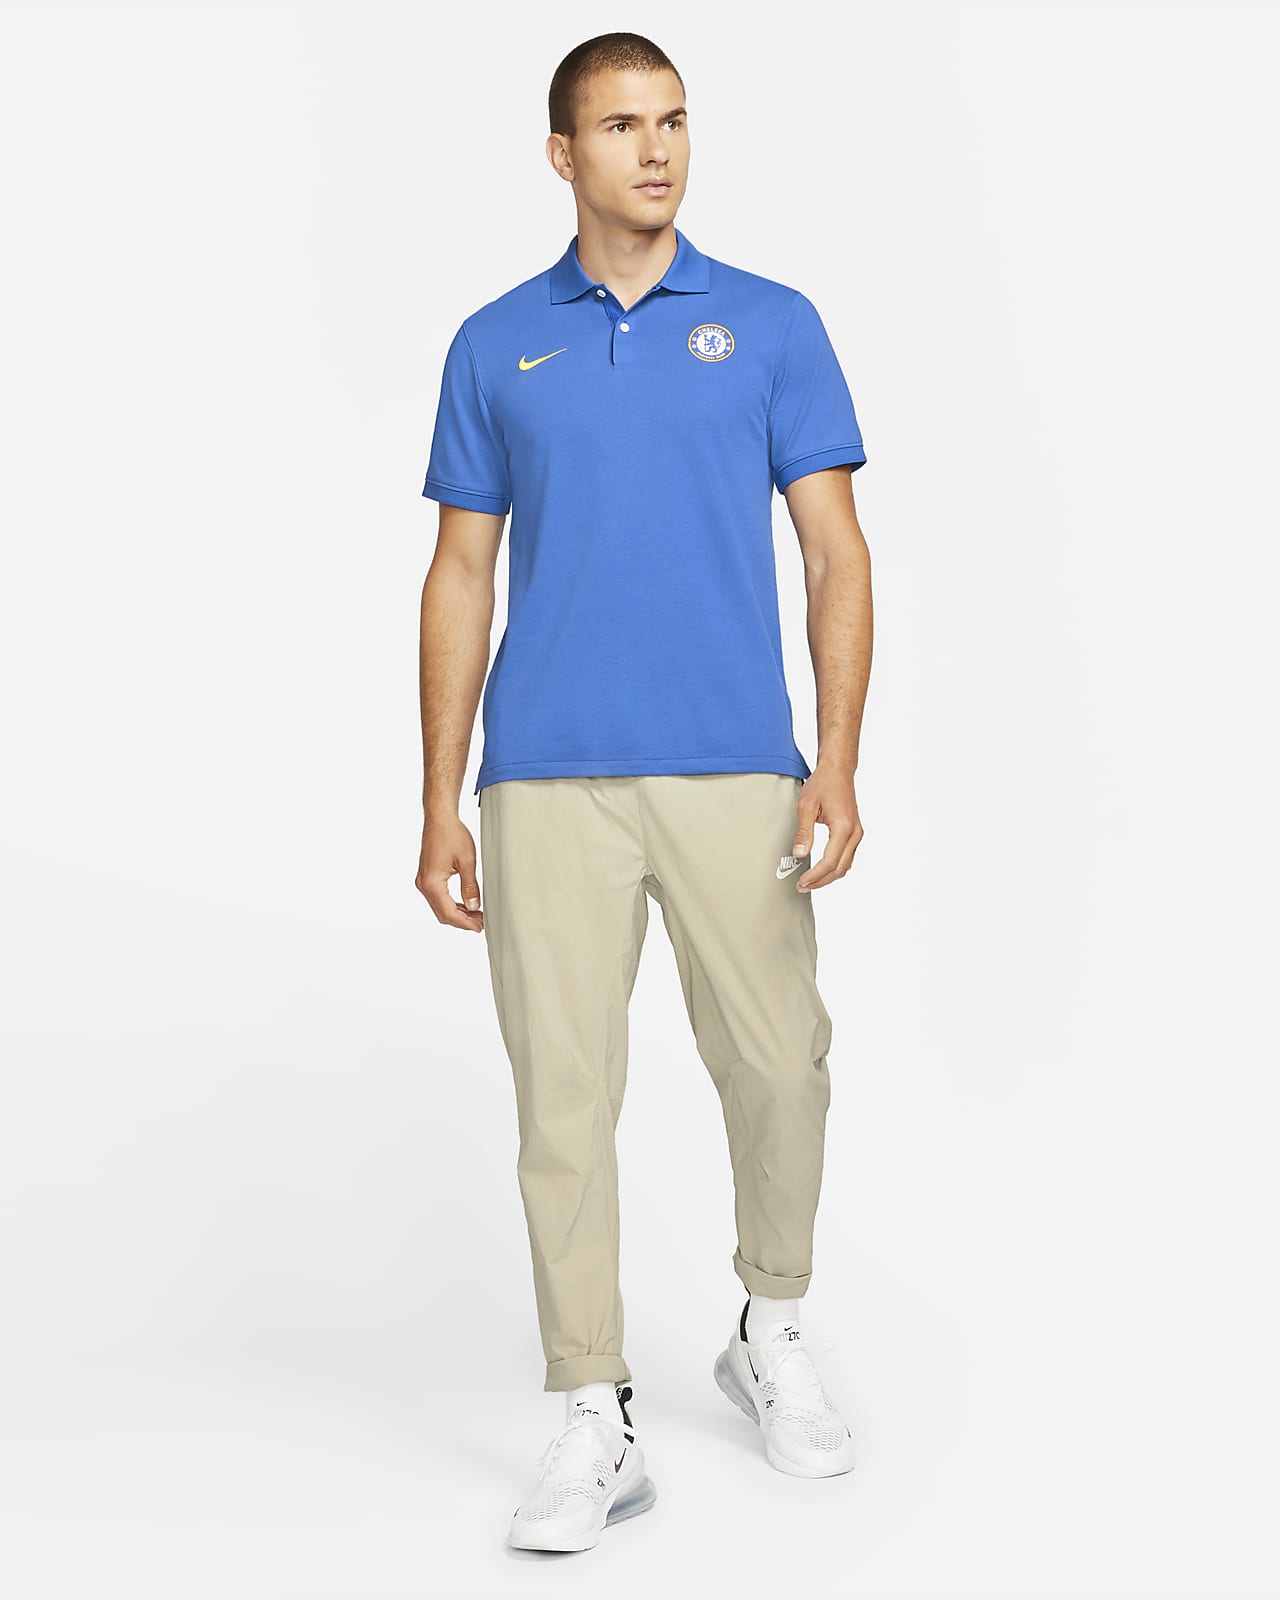 The Nike Polo Chelsea F.C. Men's Slim-Fit Polo. Nike LU